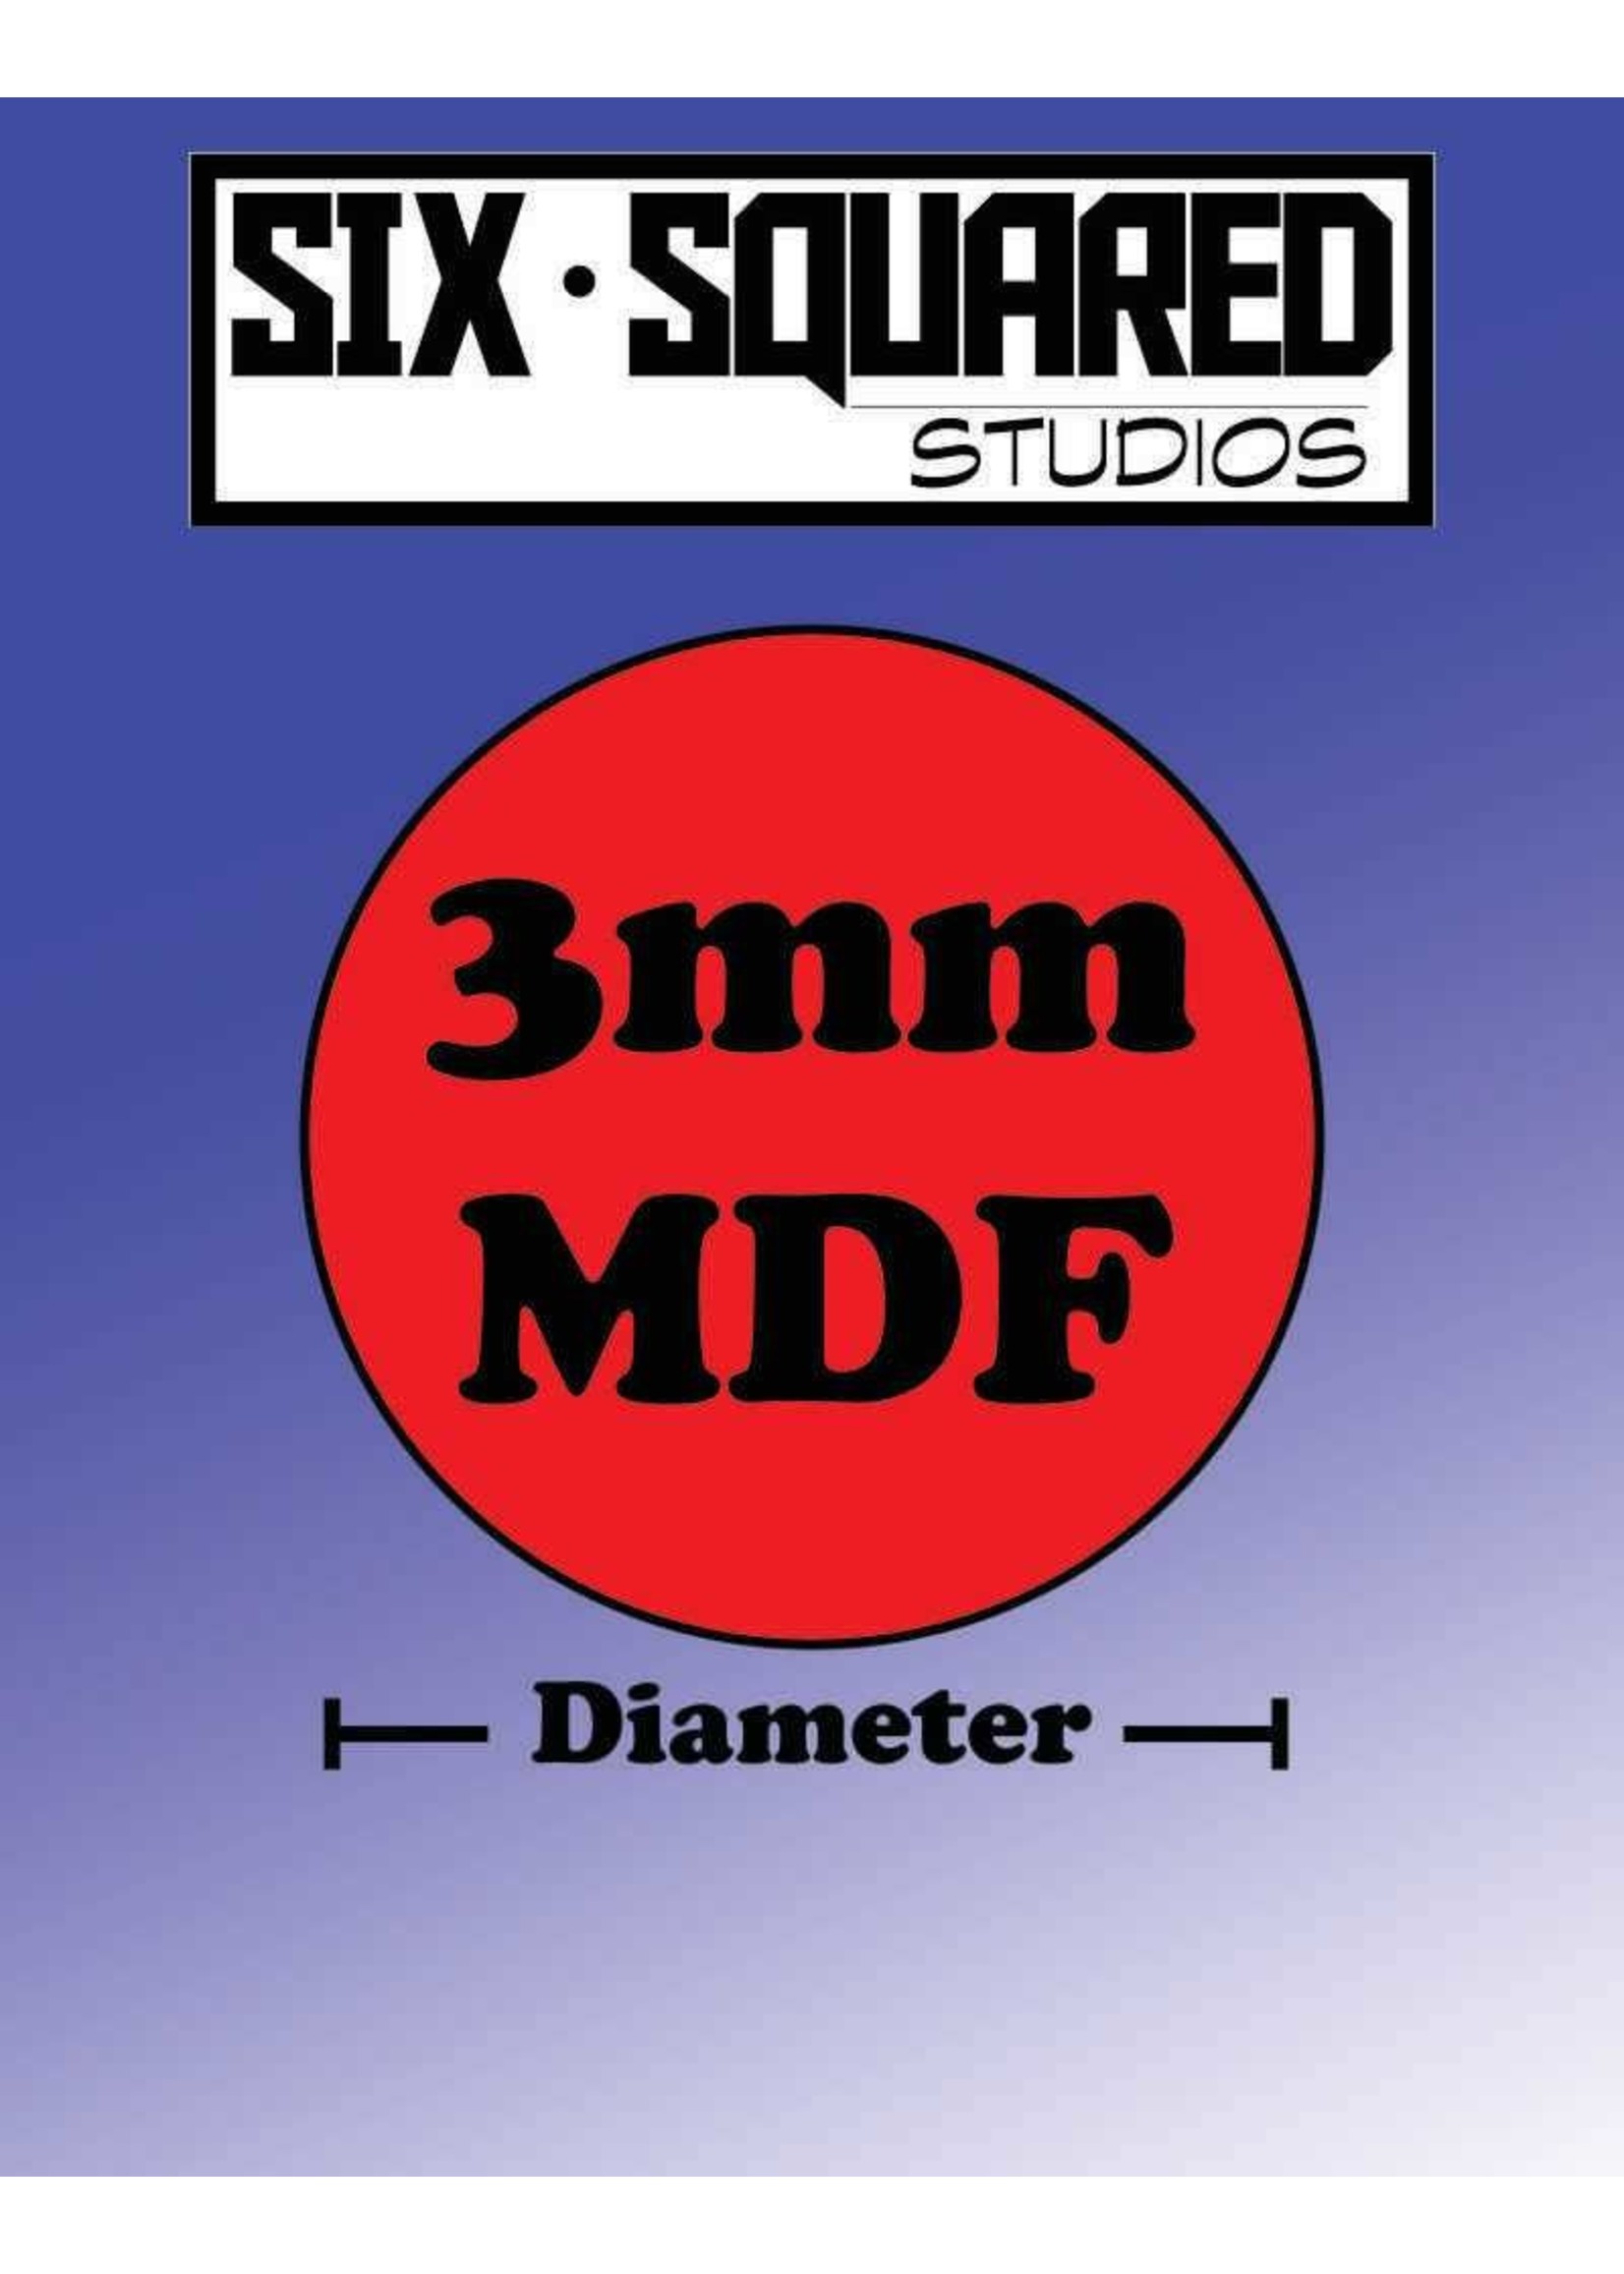 6 Squared Studios 20mm round MDF bases